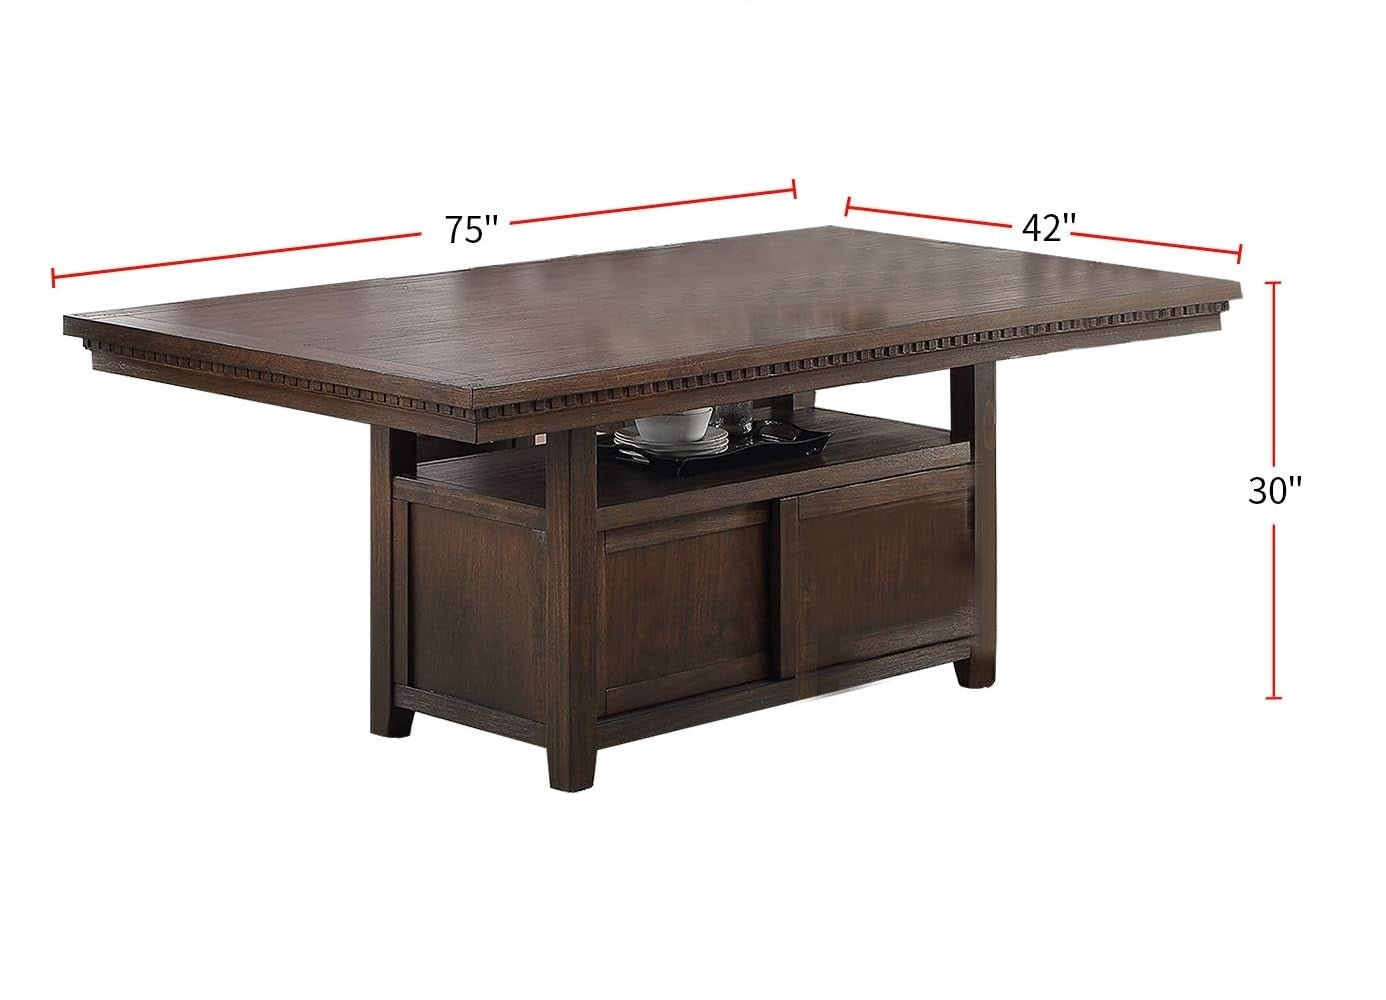 Dining Room Furniture Rustic Espresso Table w Storage espresso-wood-dining room-solid